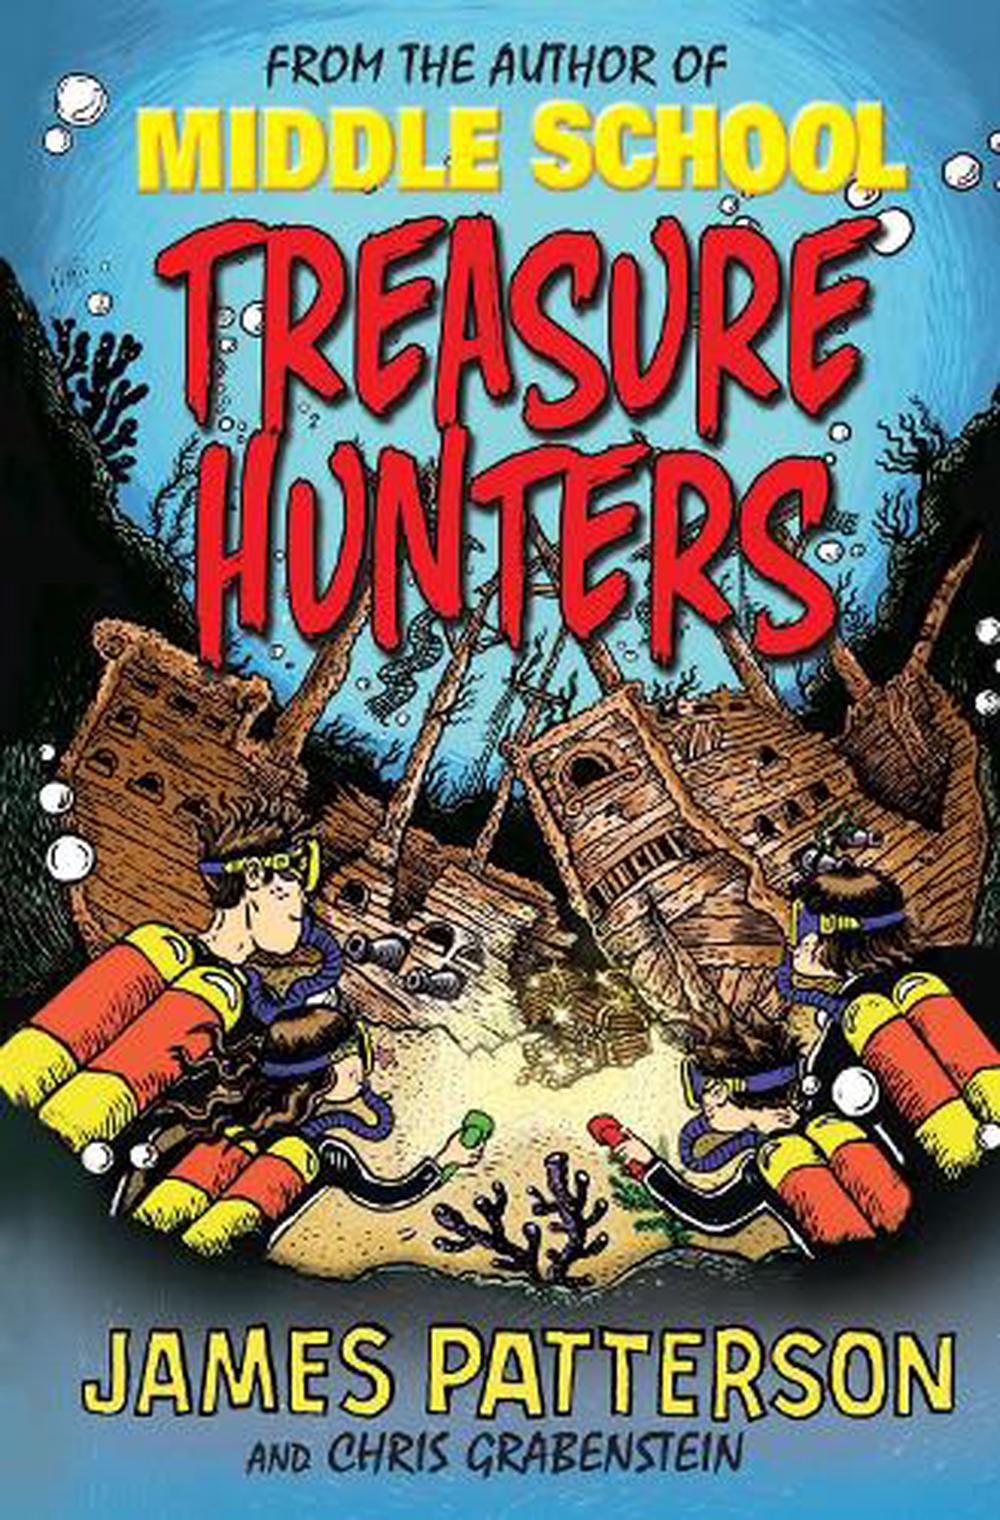 treasure hunters book 6